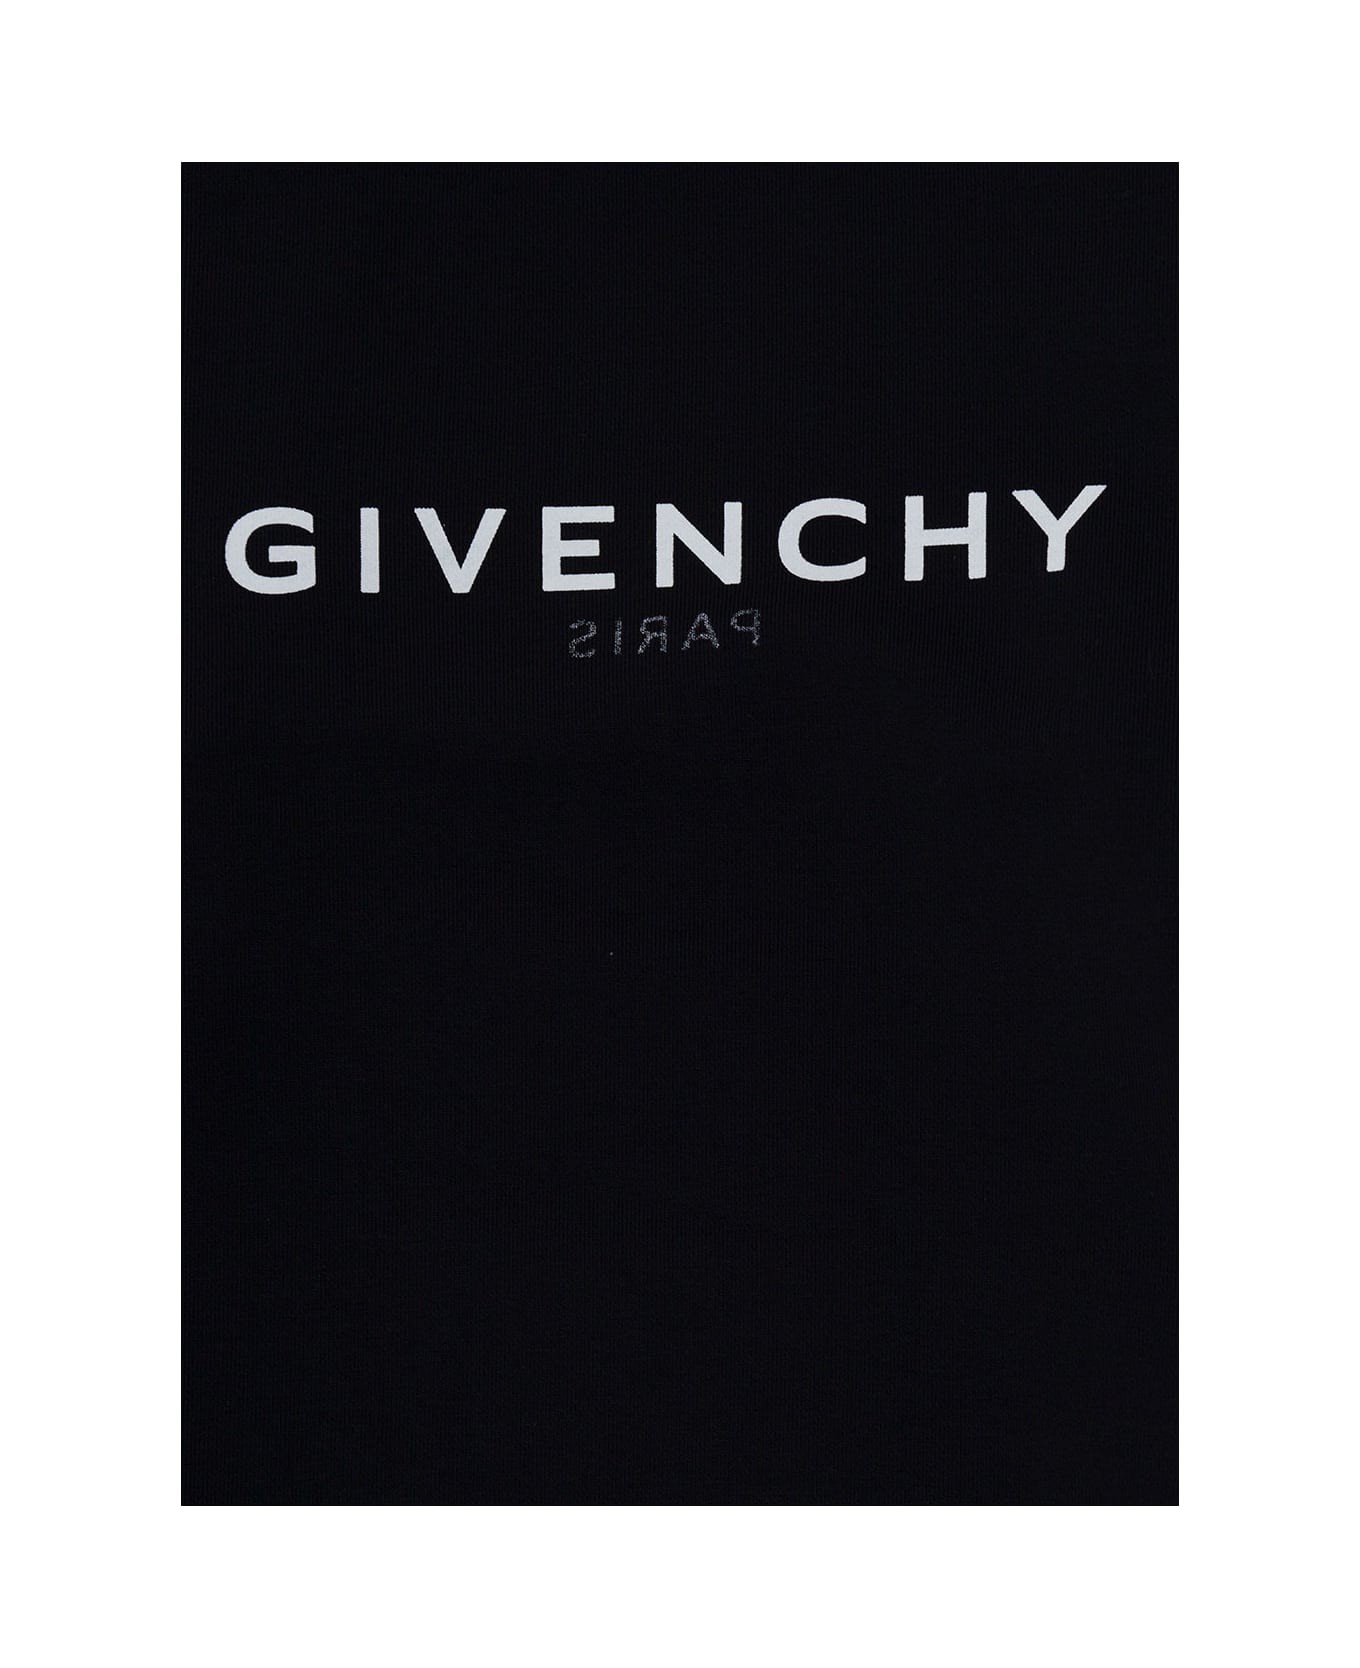 Givenchy Boy Blend Cotton Black Sweatshirt With Logo Print - Black